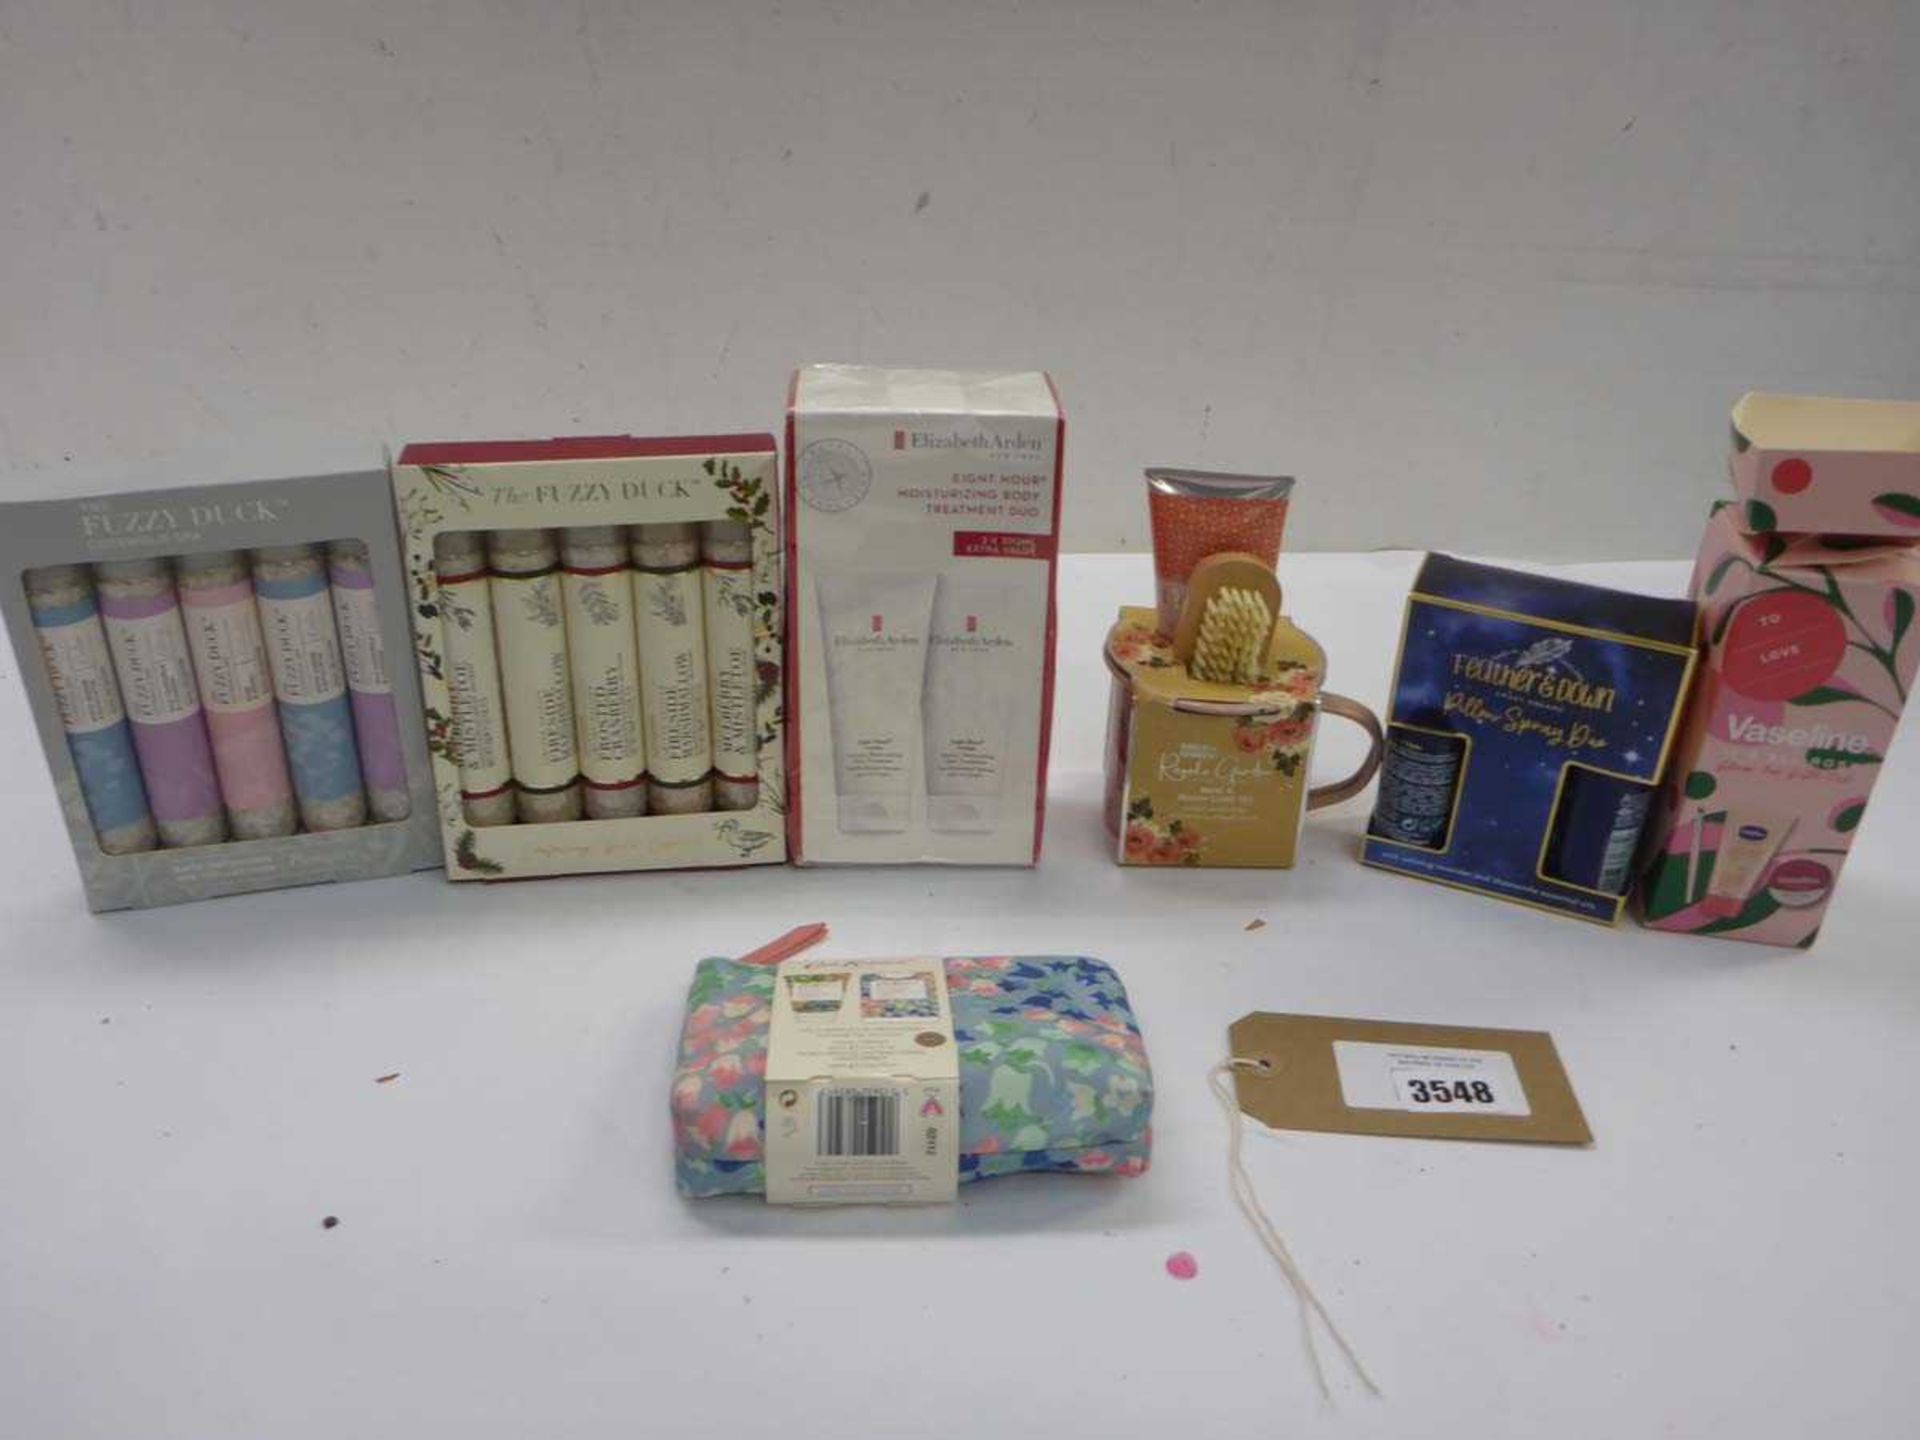 +VAT Selection of beauty gift sets including Cath Kidston, Elizabeth Arden, Fuzzy Duck etc